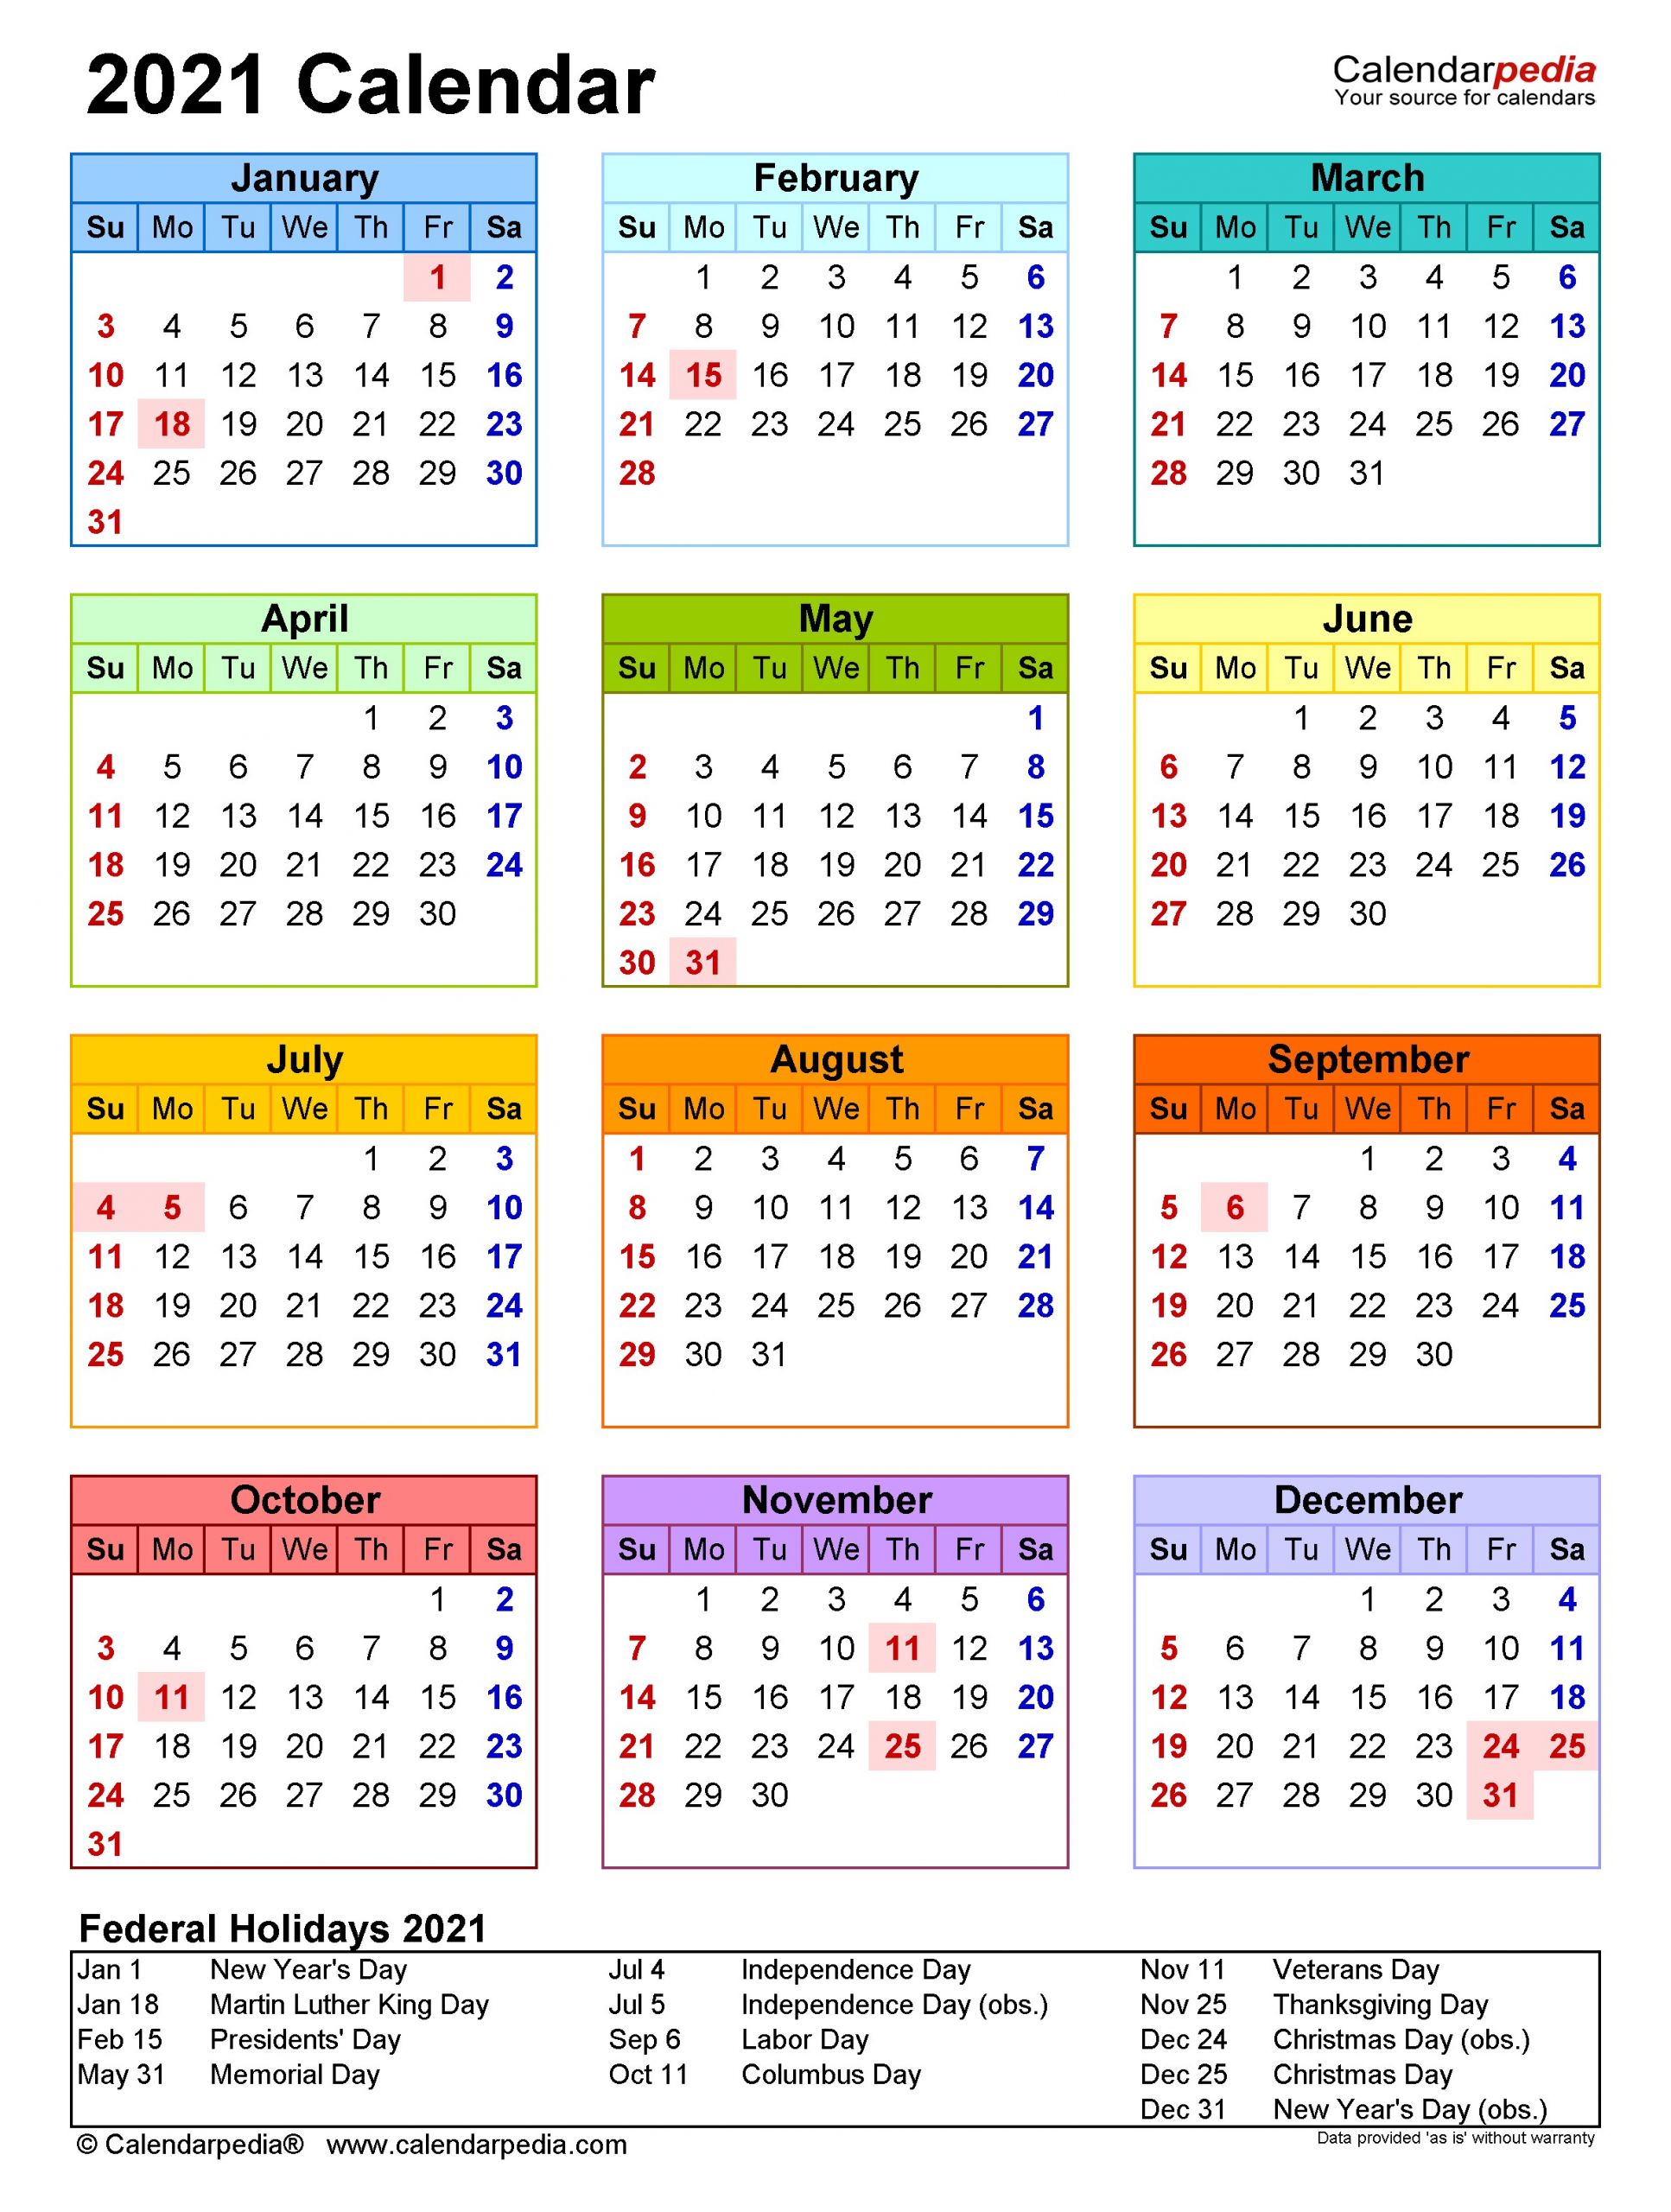 2021 Calendar Holidays And Observances